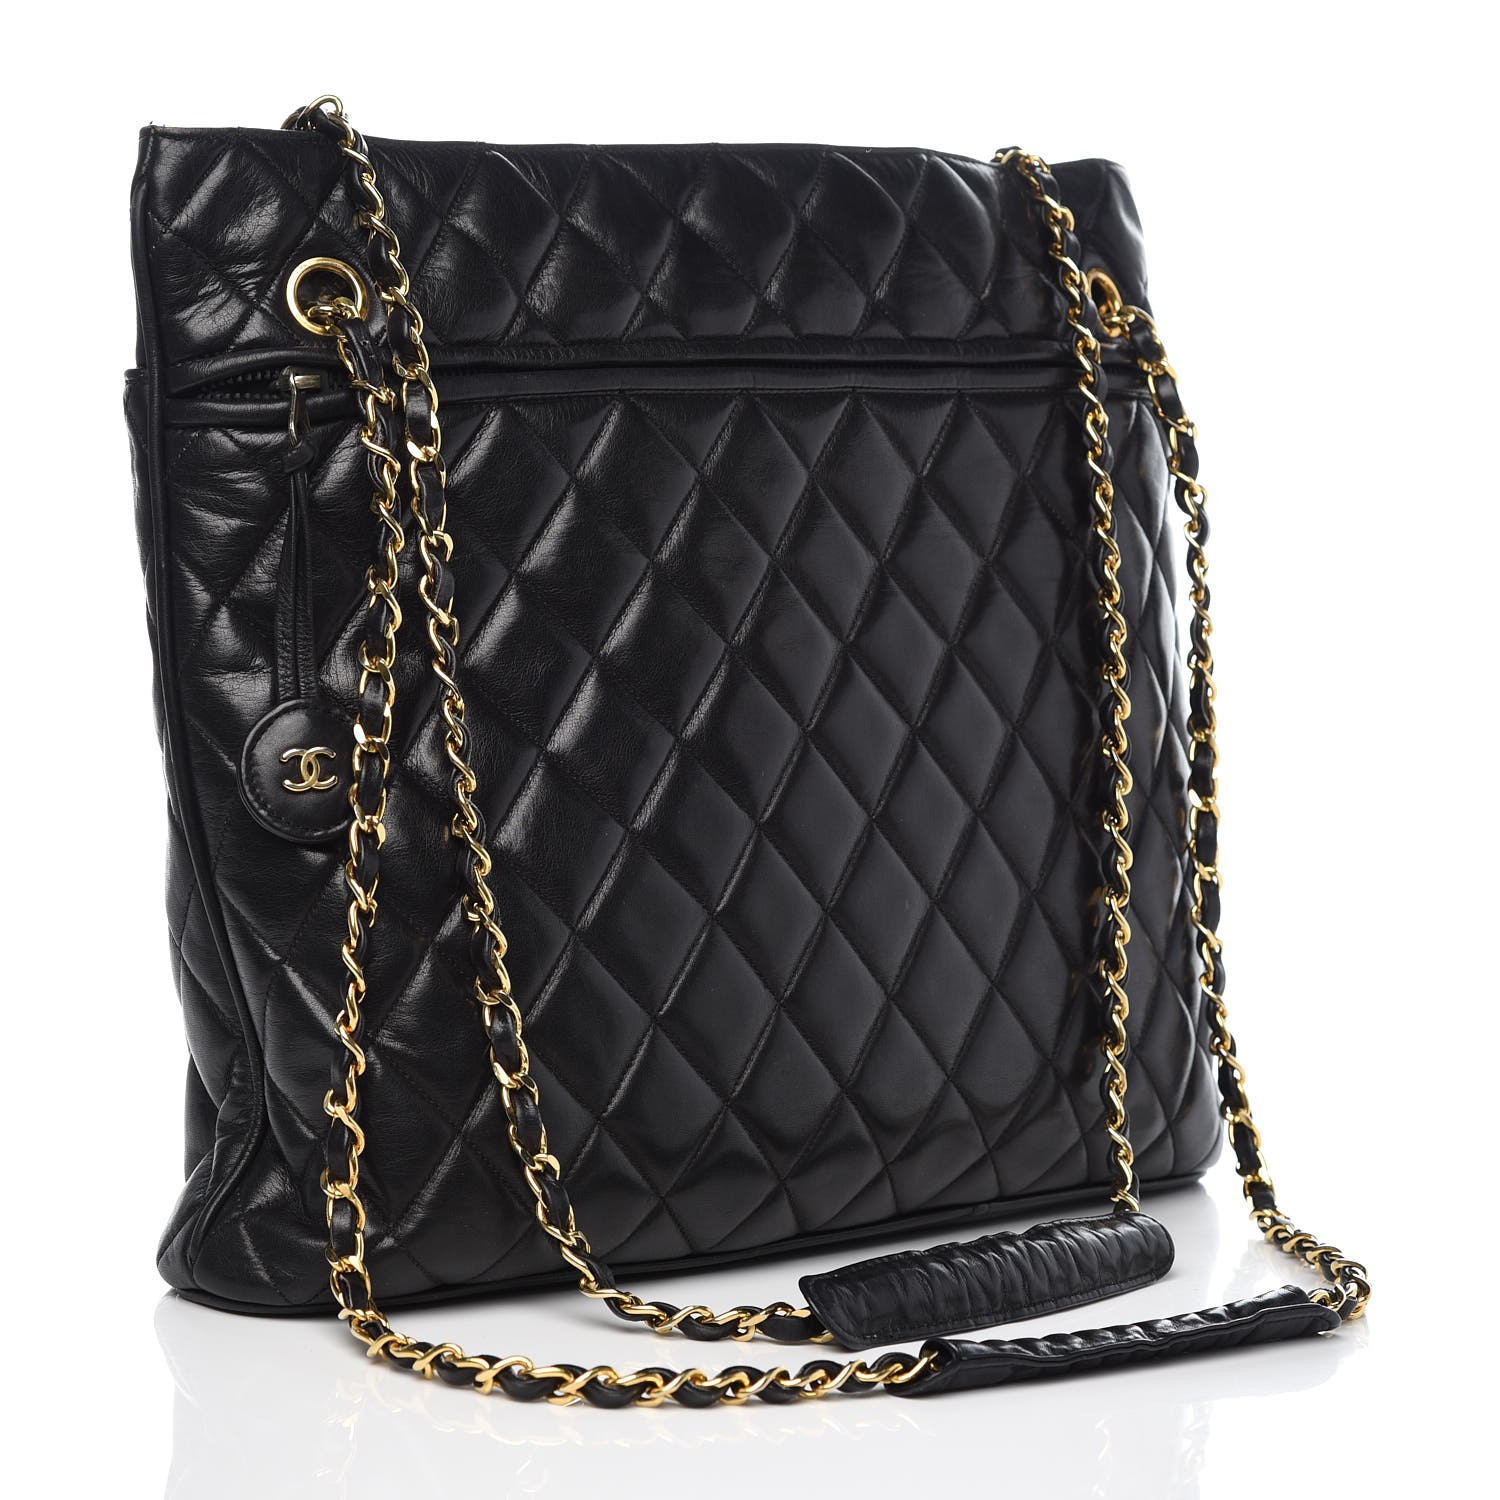 Black Quilted Chanel Handbag | semashow.com